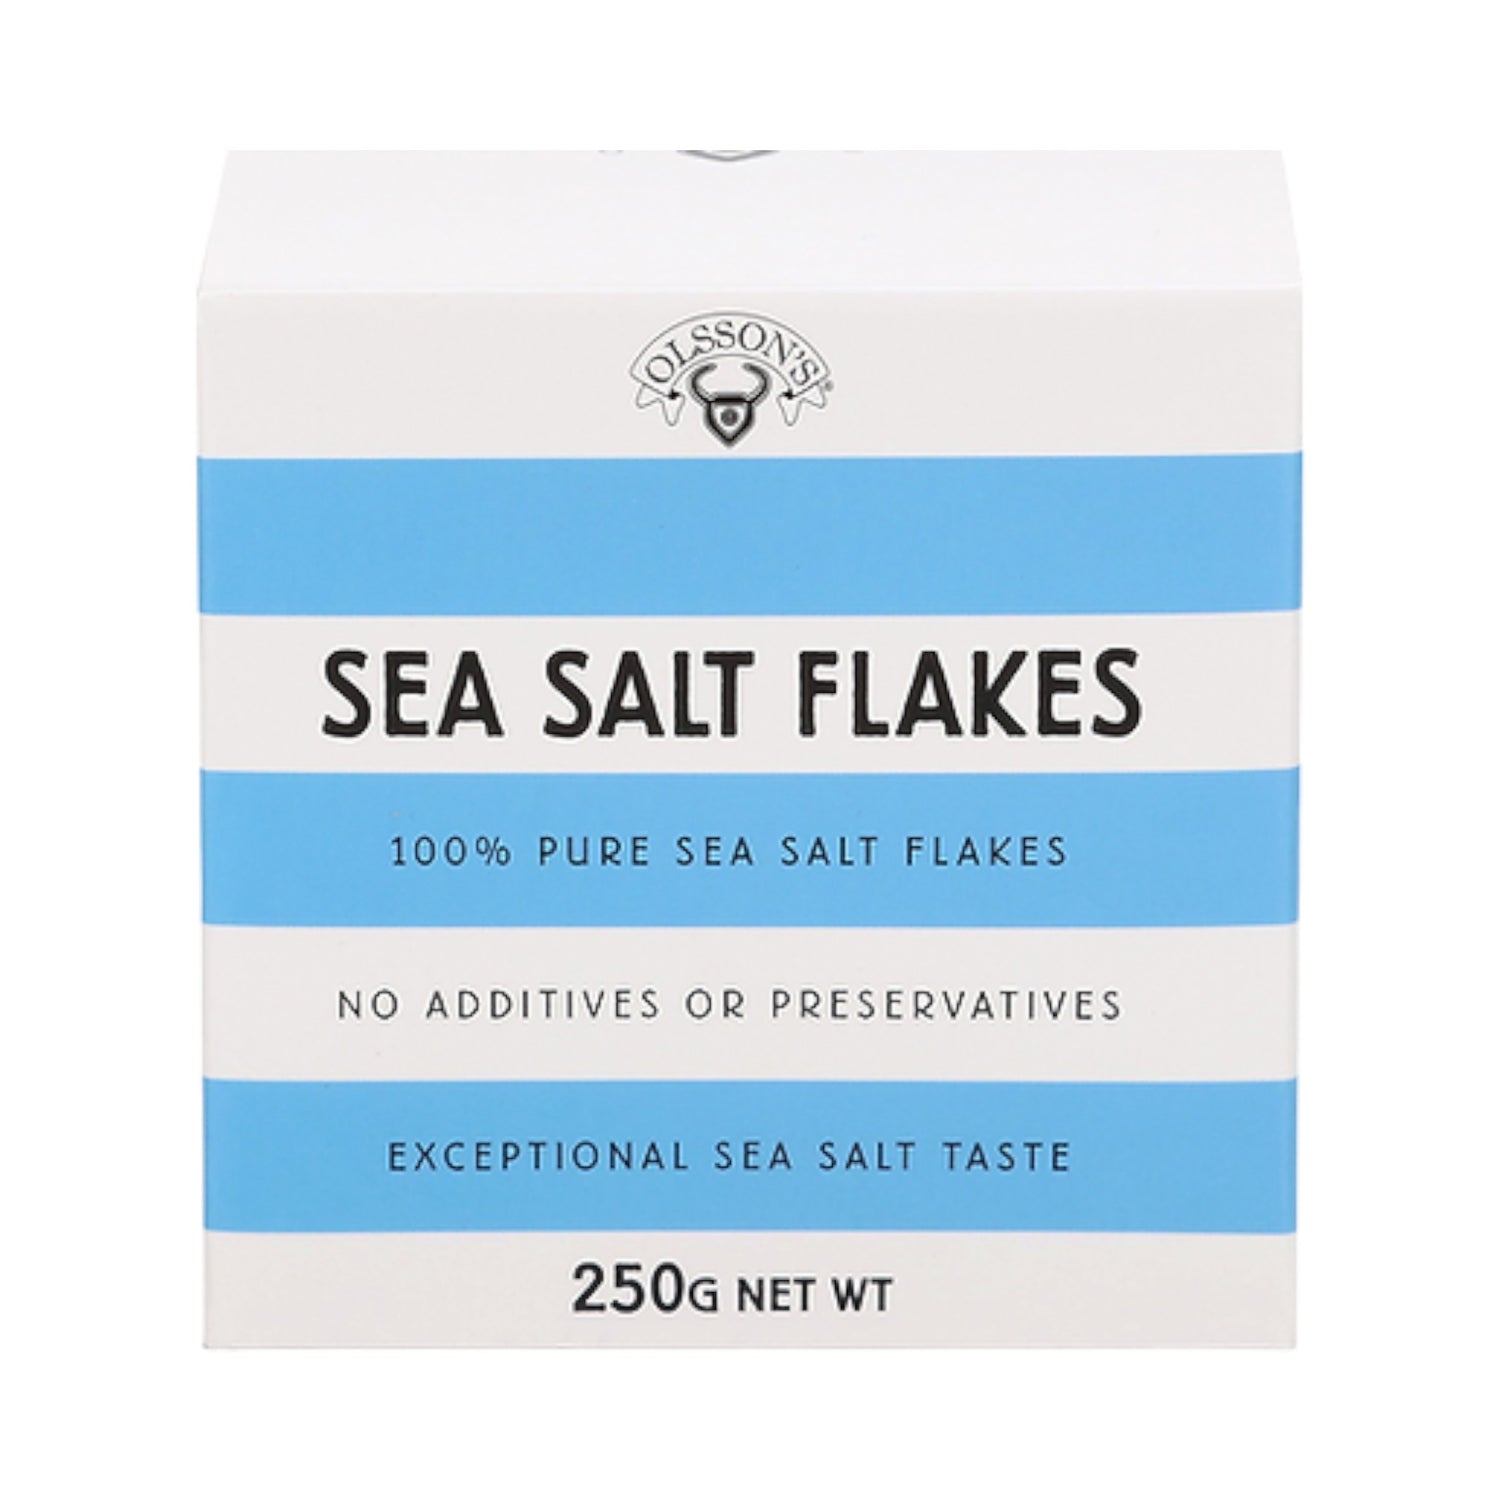 Sea Salt Flakes 250g Cube Box